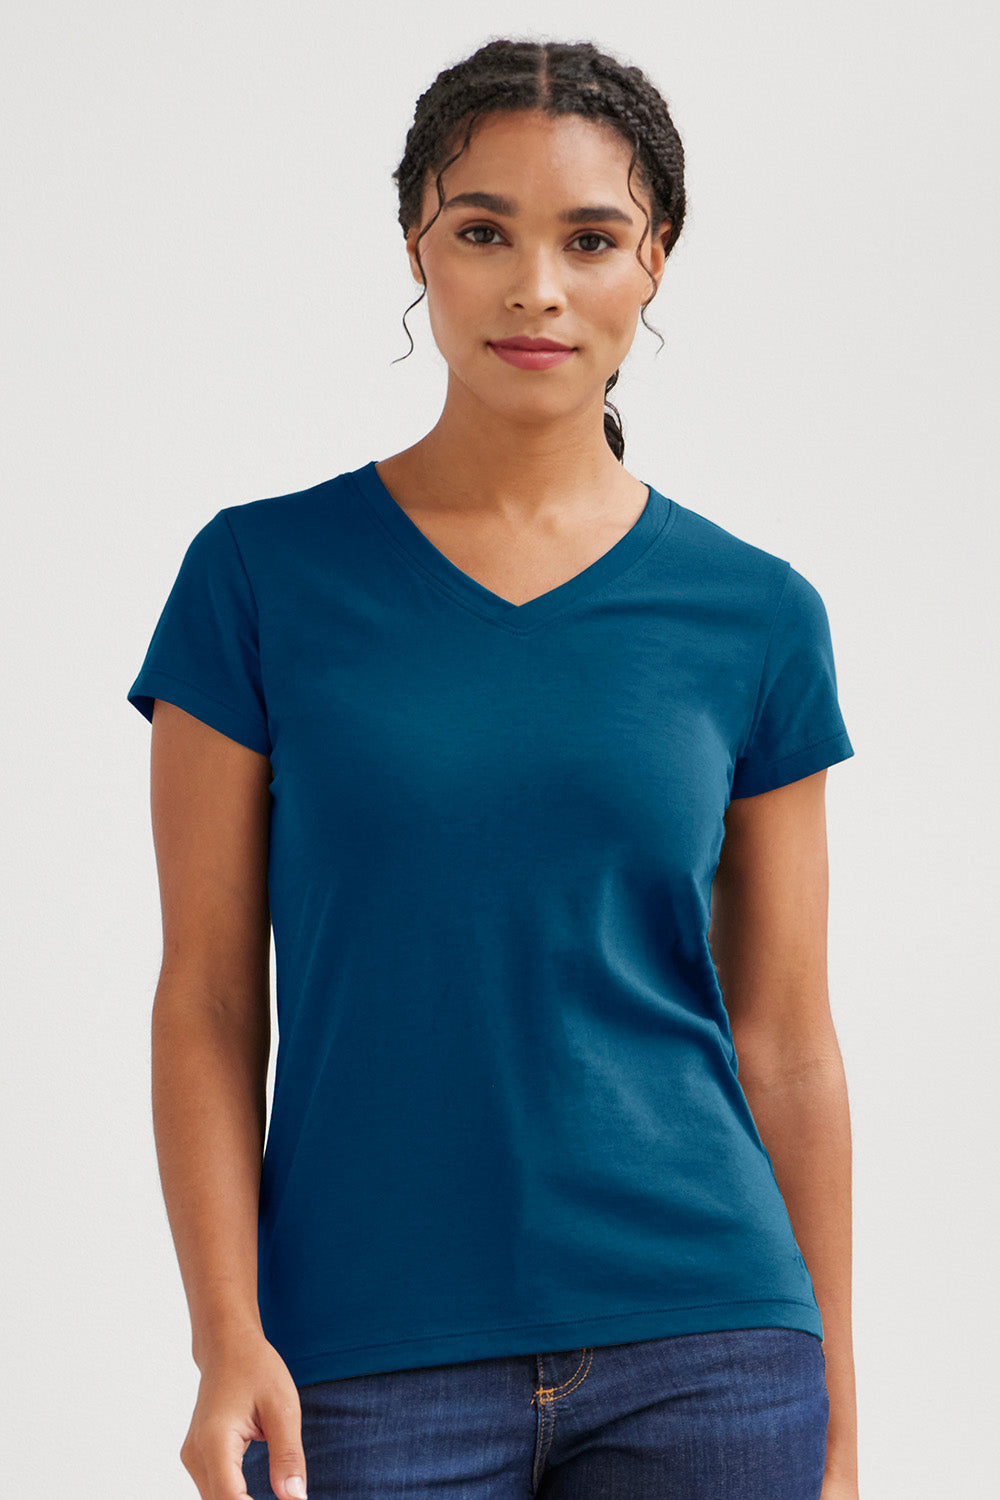 T-shirt femme bio col V - B&C - Inspire V/women - l'énergie est notre avenir